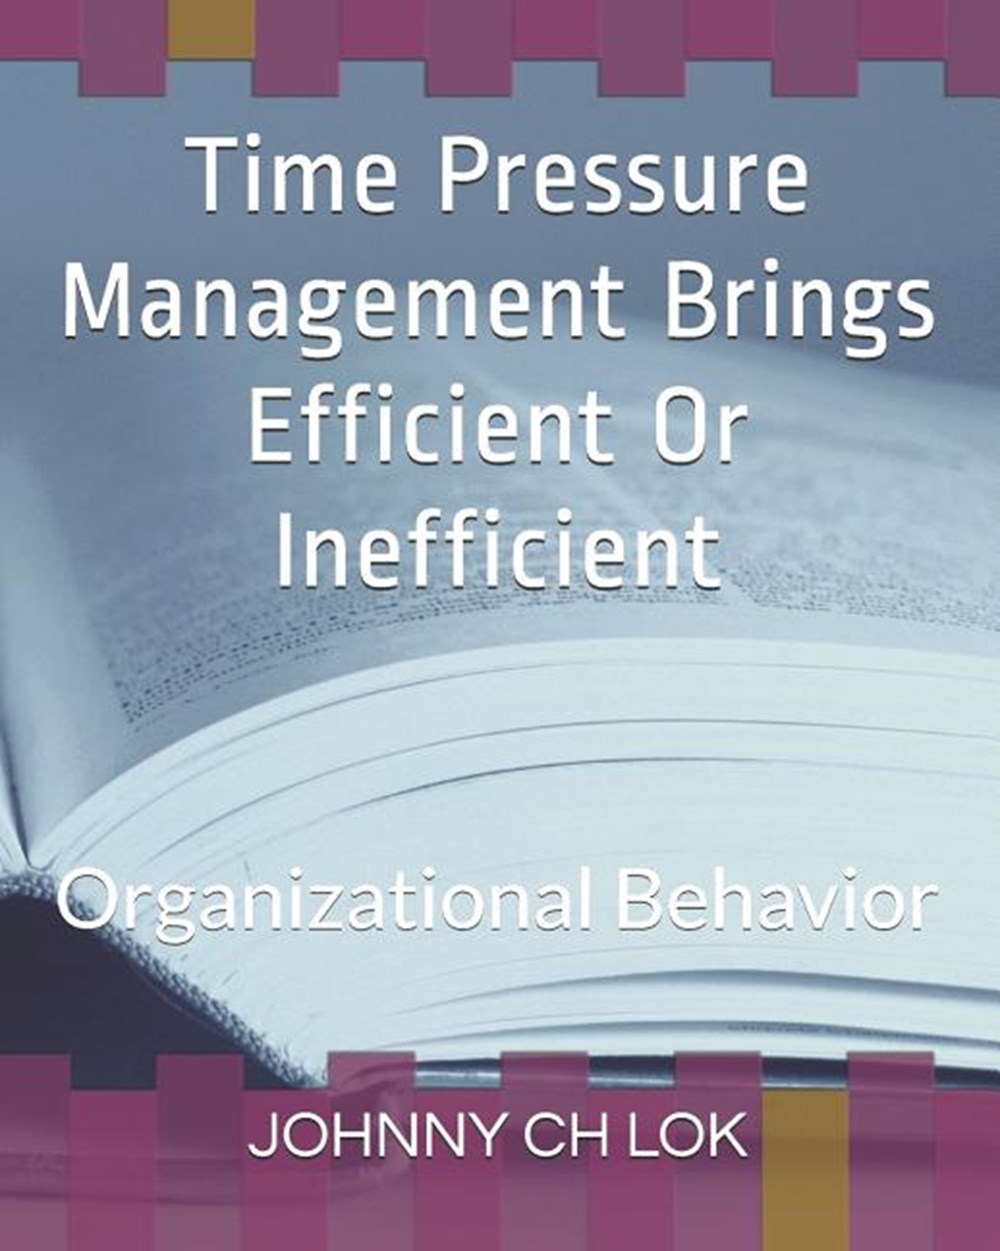 Time Pressure Management Brings Efficient Or Inefficient: Organizational Behavior